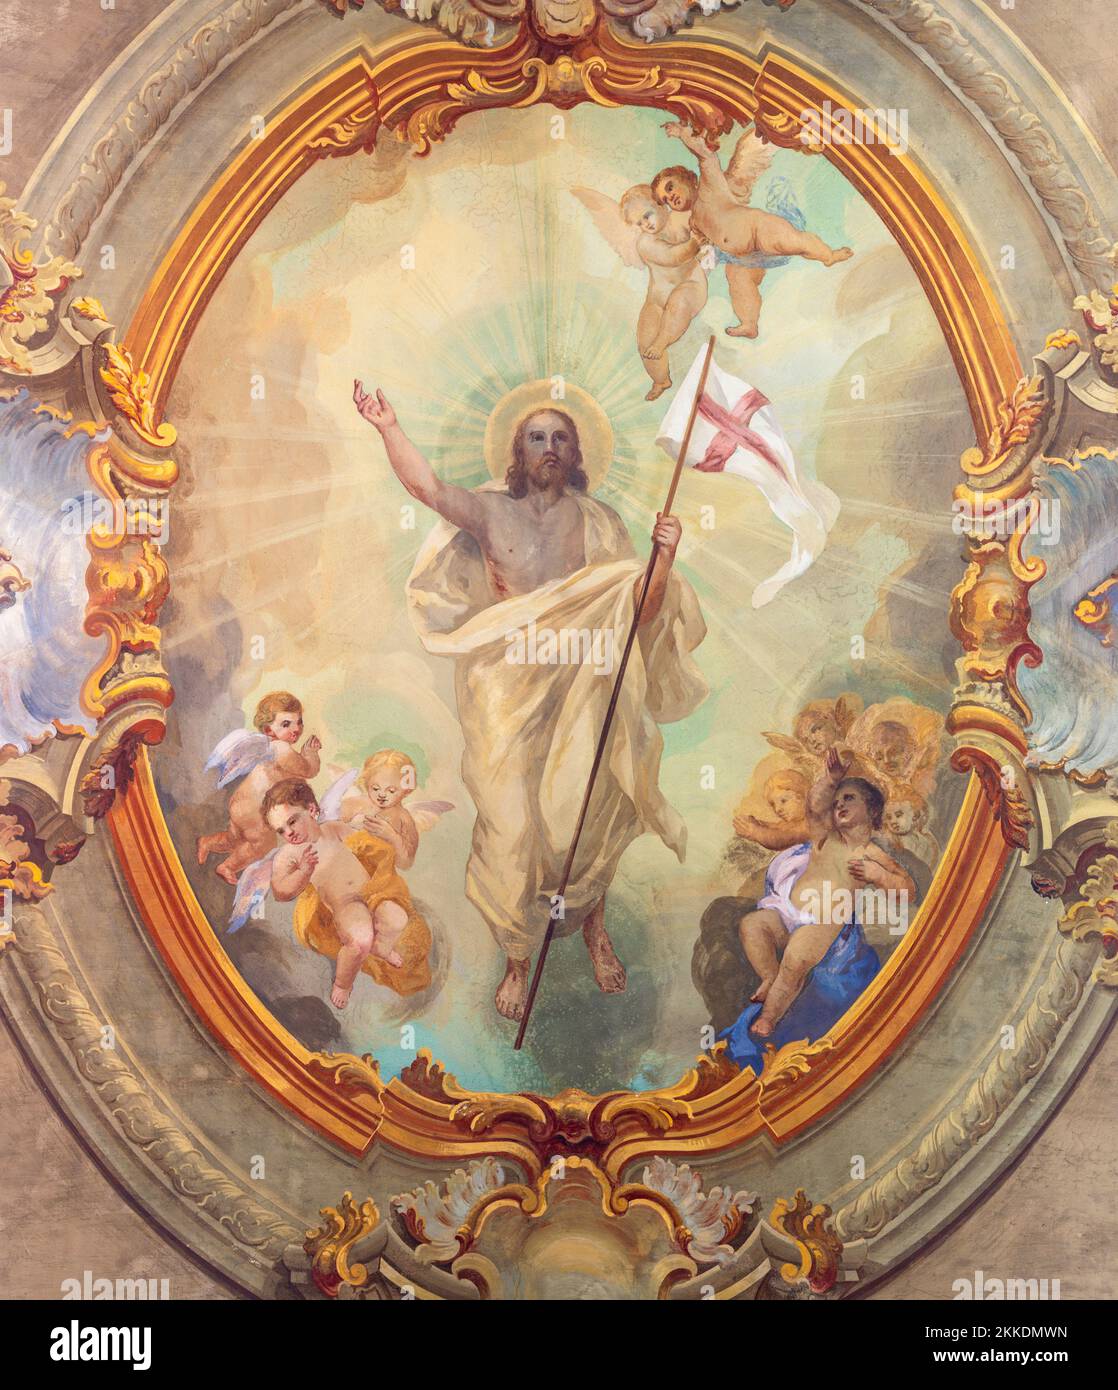 VARALLO, ITALIEN - 17. JULI 2022: Das barocke Deckenfresko der Auferstehung Jesu in der Kirche Collegiata di San Gaudenzio von Carlo Bartolomeo Bors Stockfoto